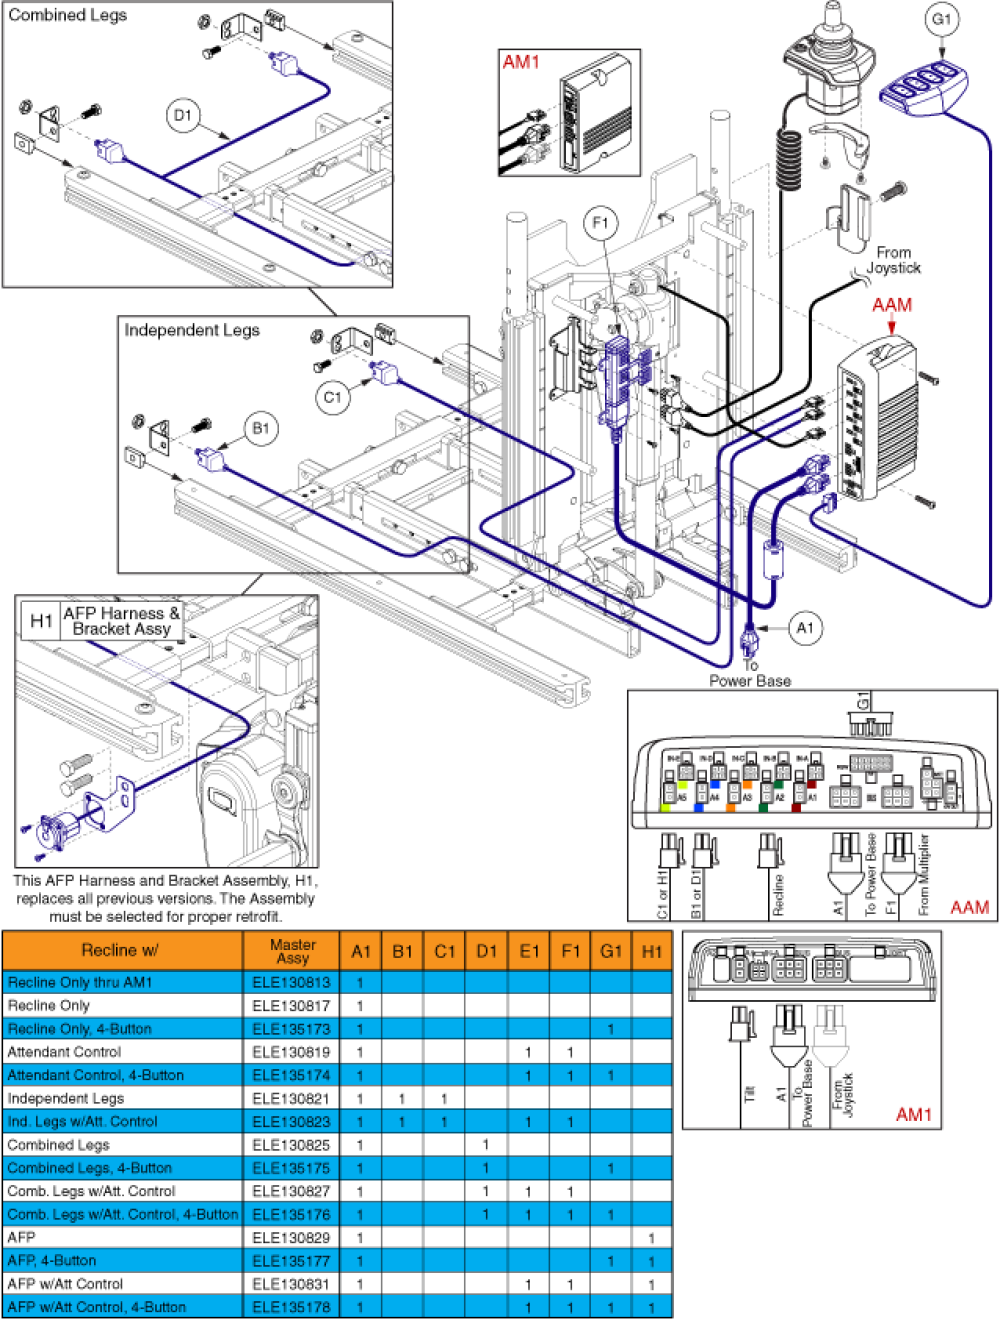 Tb3 Q-logic 2 Harnesses, Recline Only parts diagram